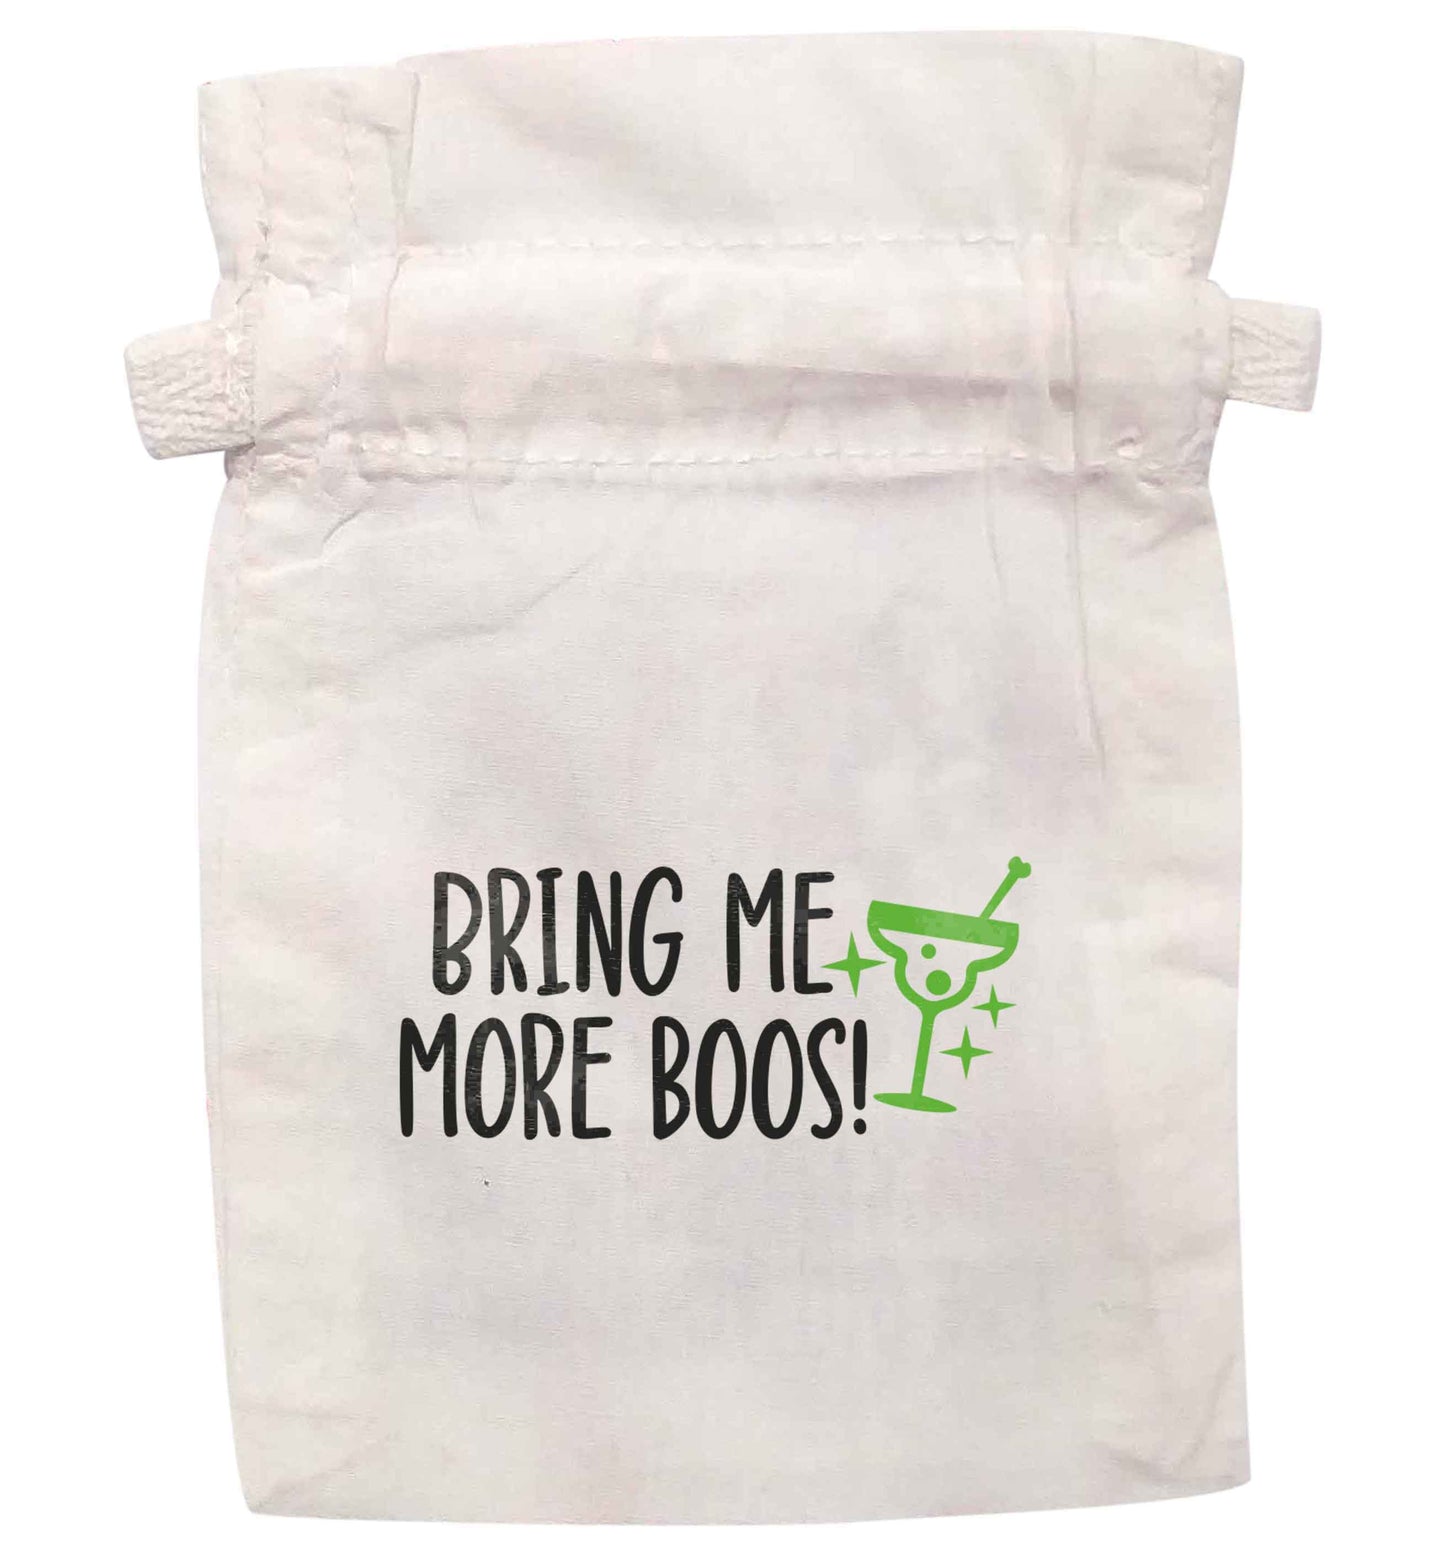 Bring me more boos | XS - L | Pouch / Drawstring bag / Sack | Organic Cotton | Bulk discounts available!